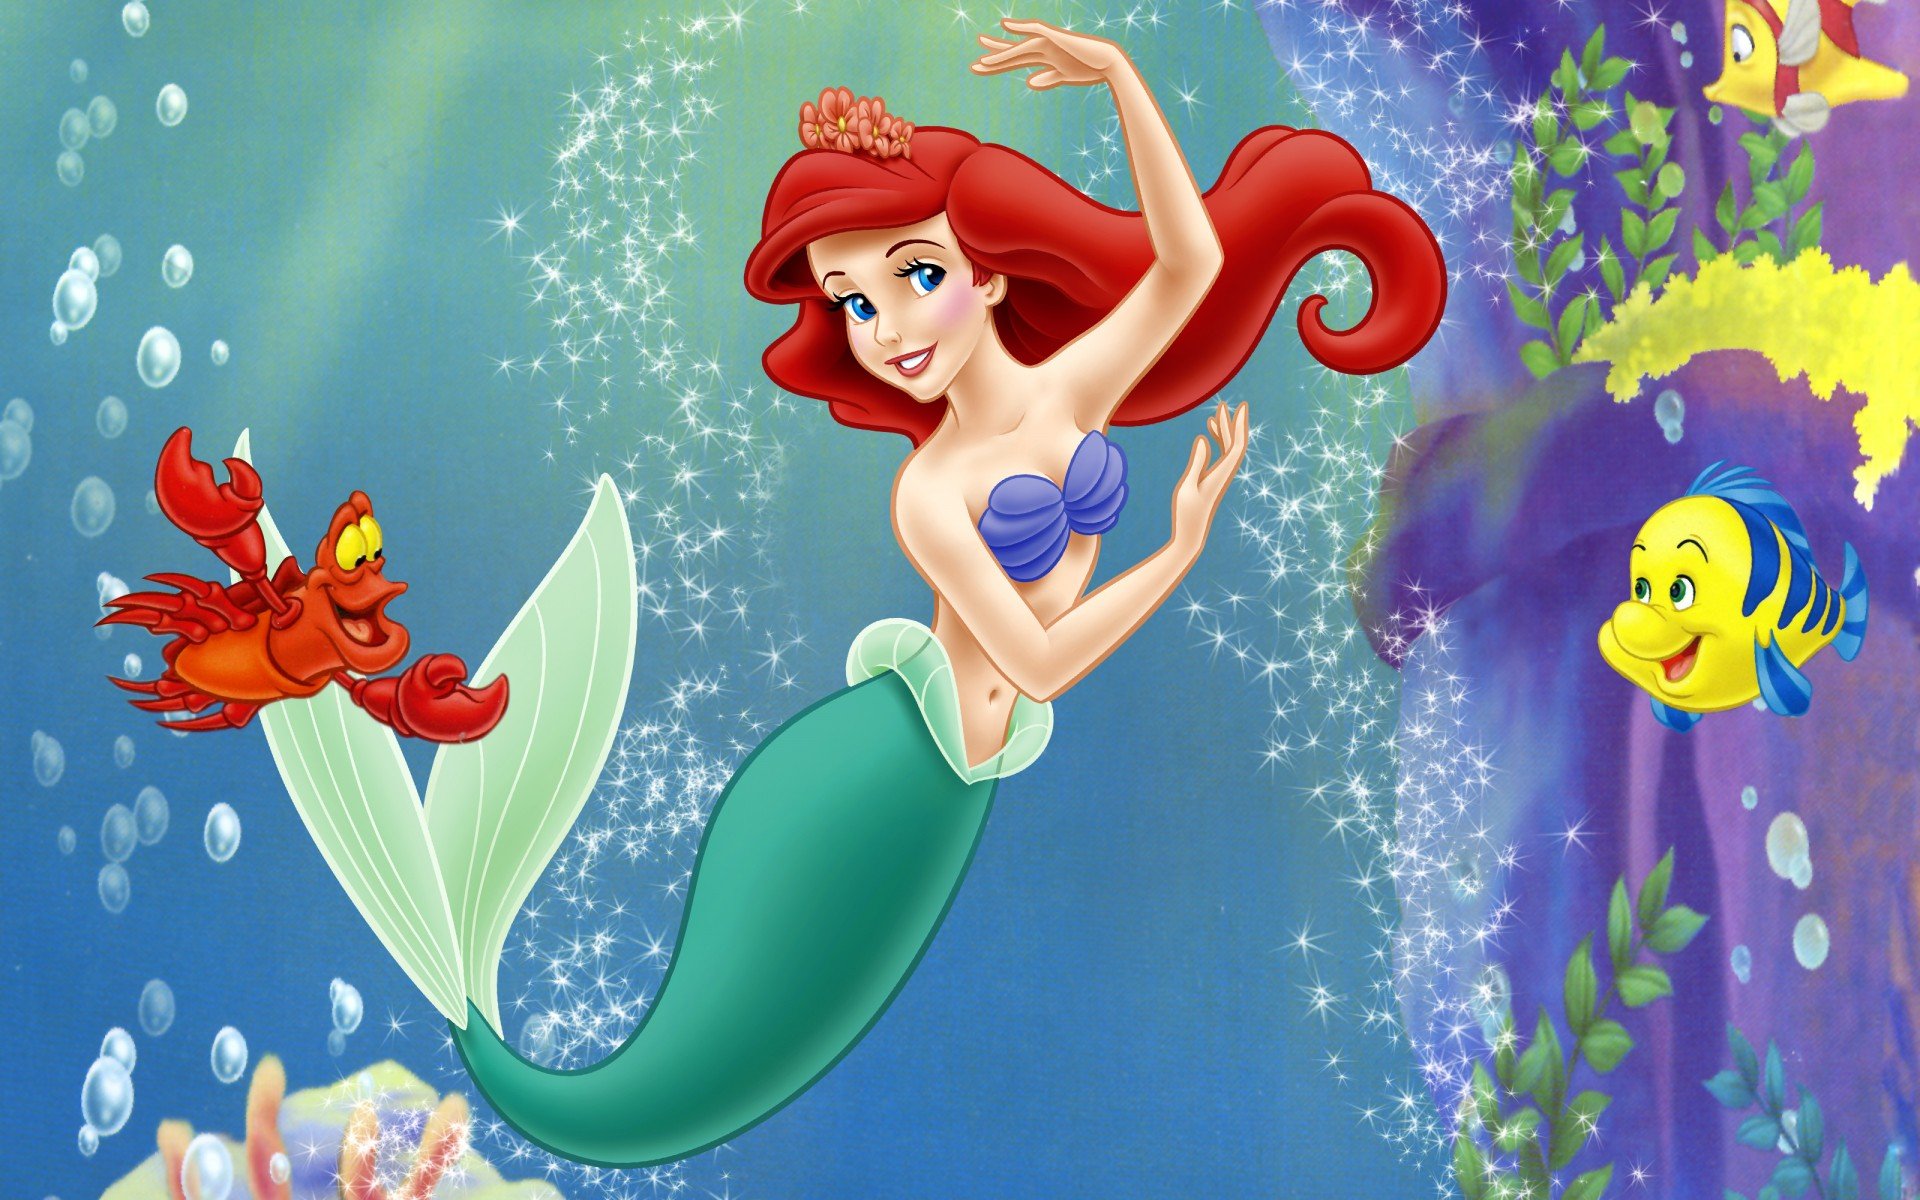 Little Mermaid Disney Fantasy Animation Cartoon Adventure Family